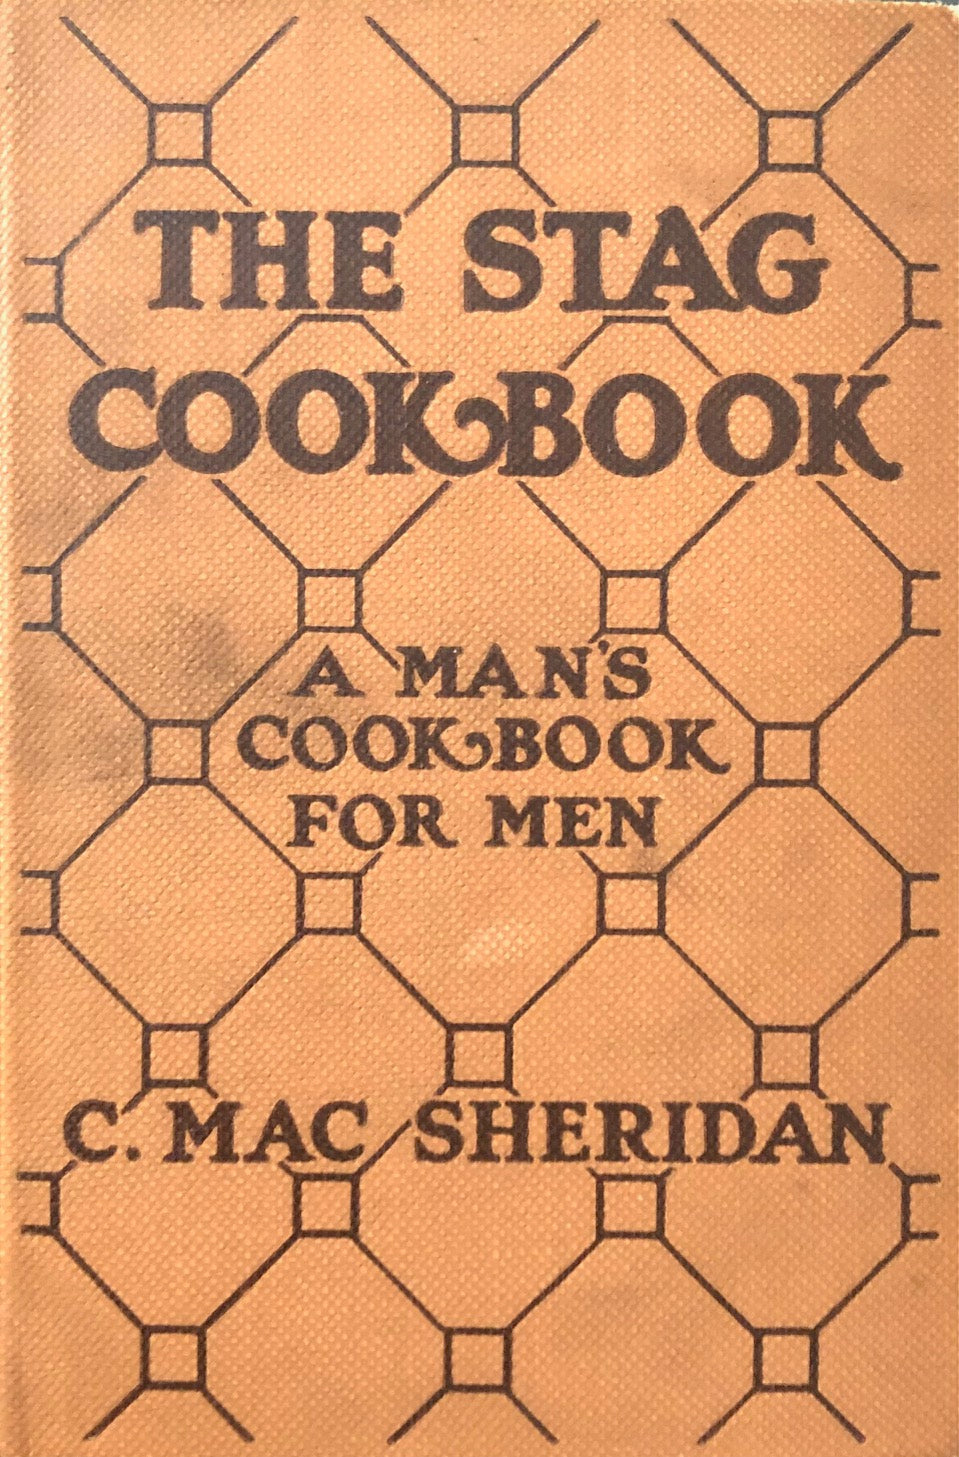 (Men's) Sheridan, C. Mac, ed. The Stag Cookbook: A Man's Cookbook for Men.